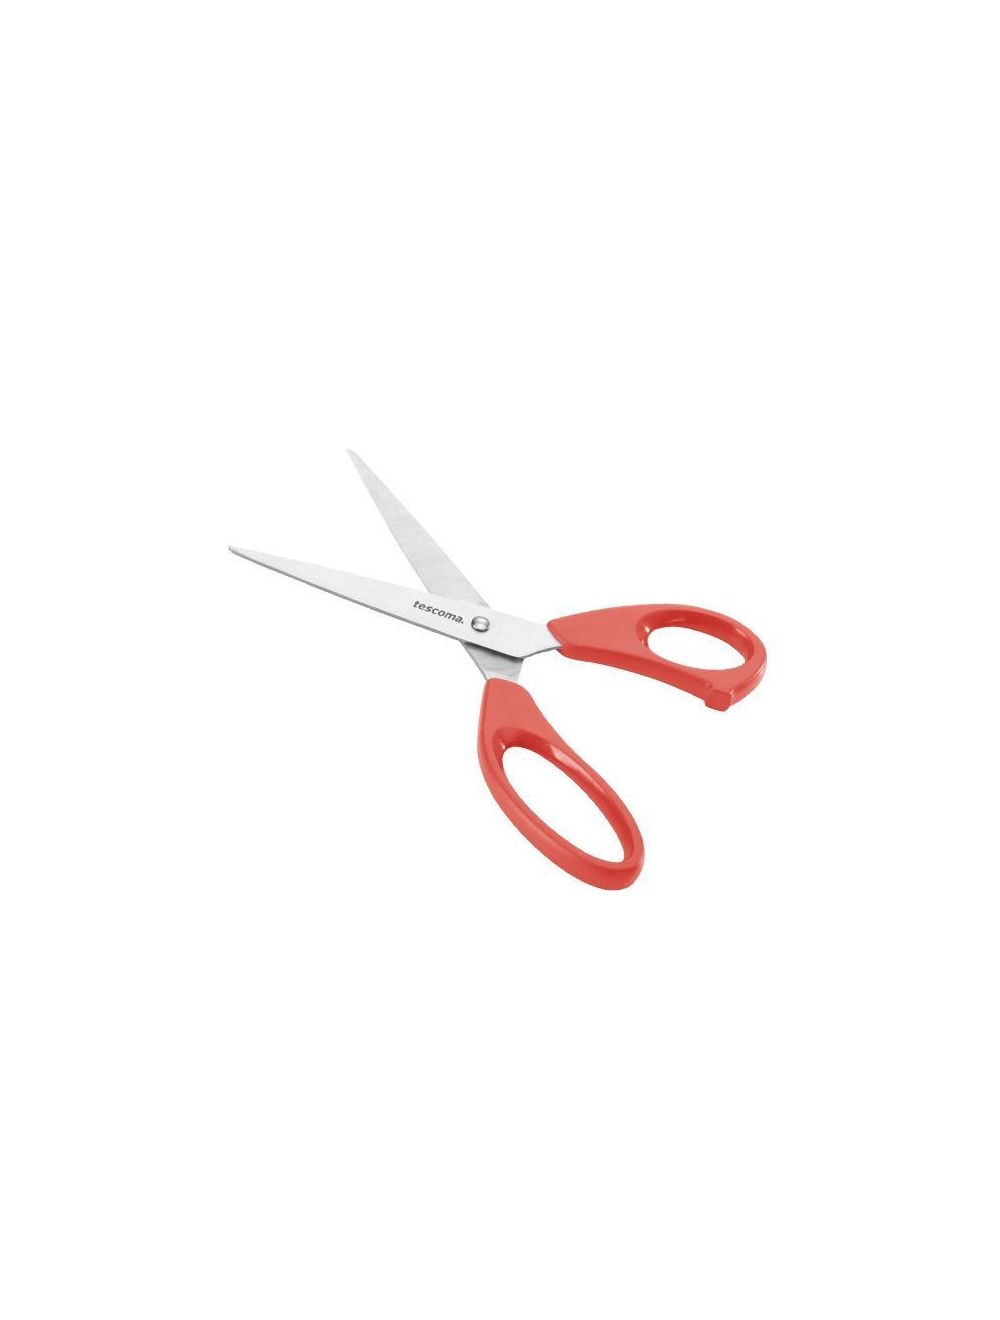 Household Scissors Presto 22 cm - Assorted Colour